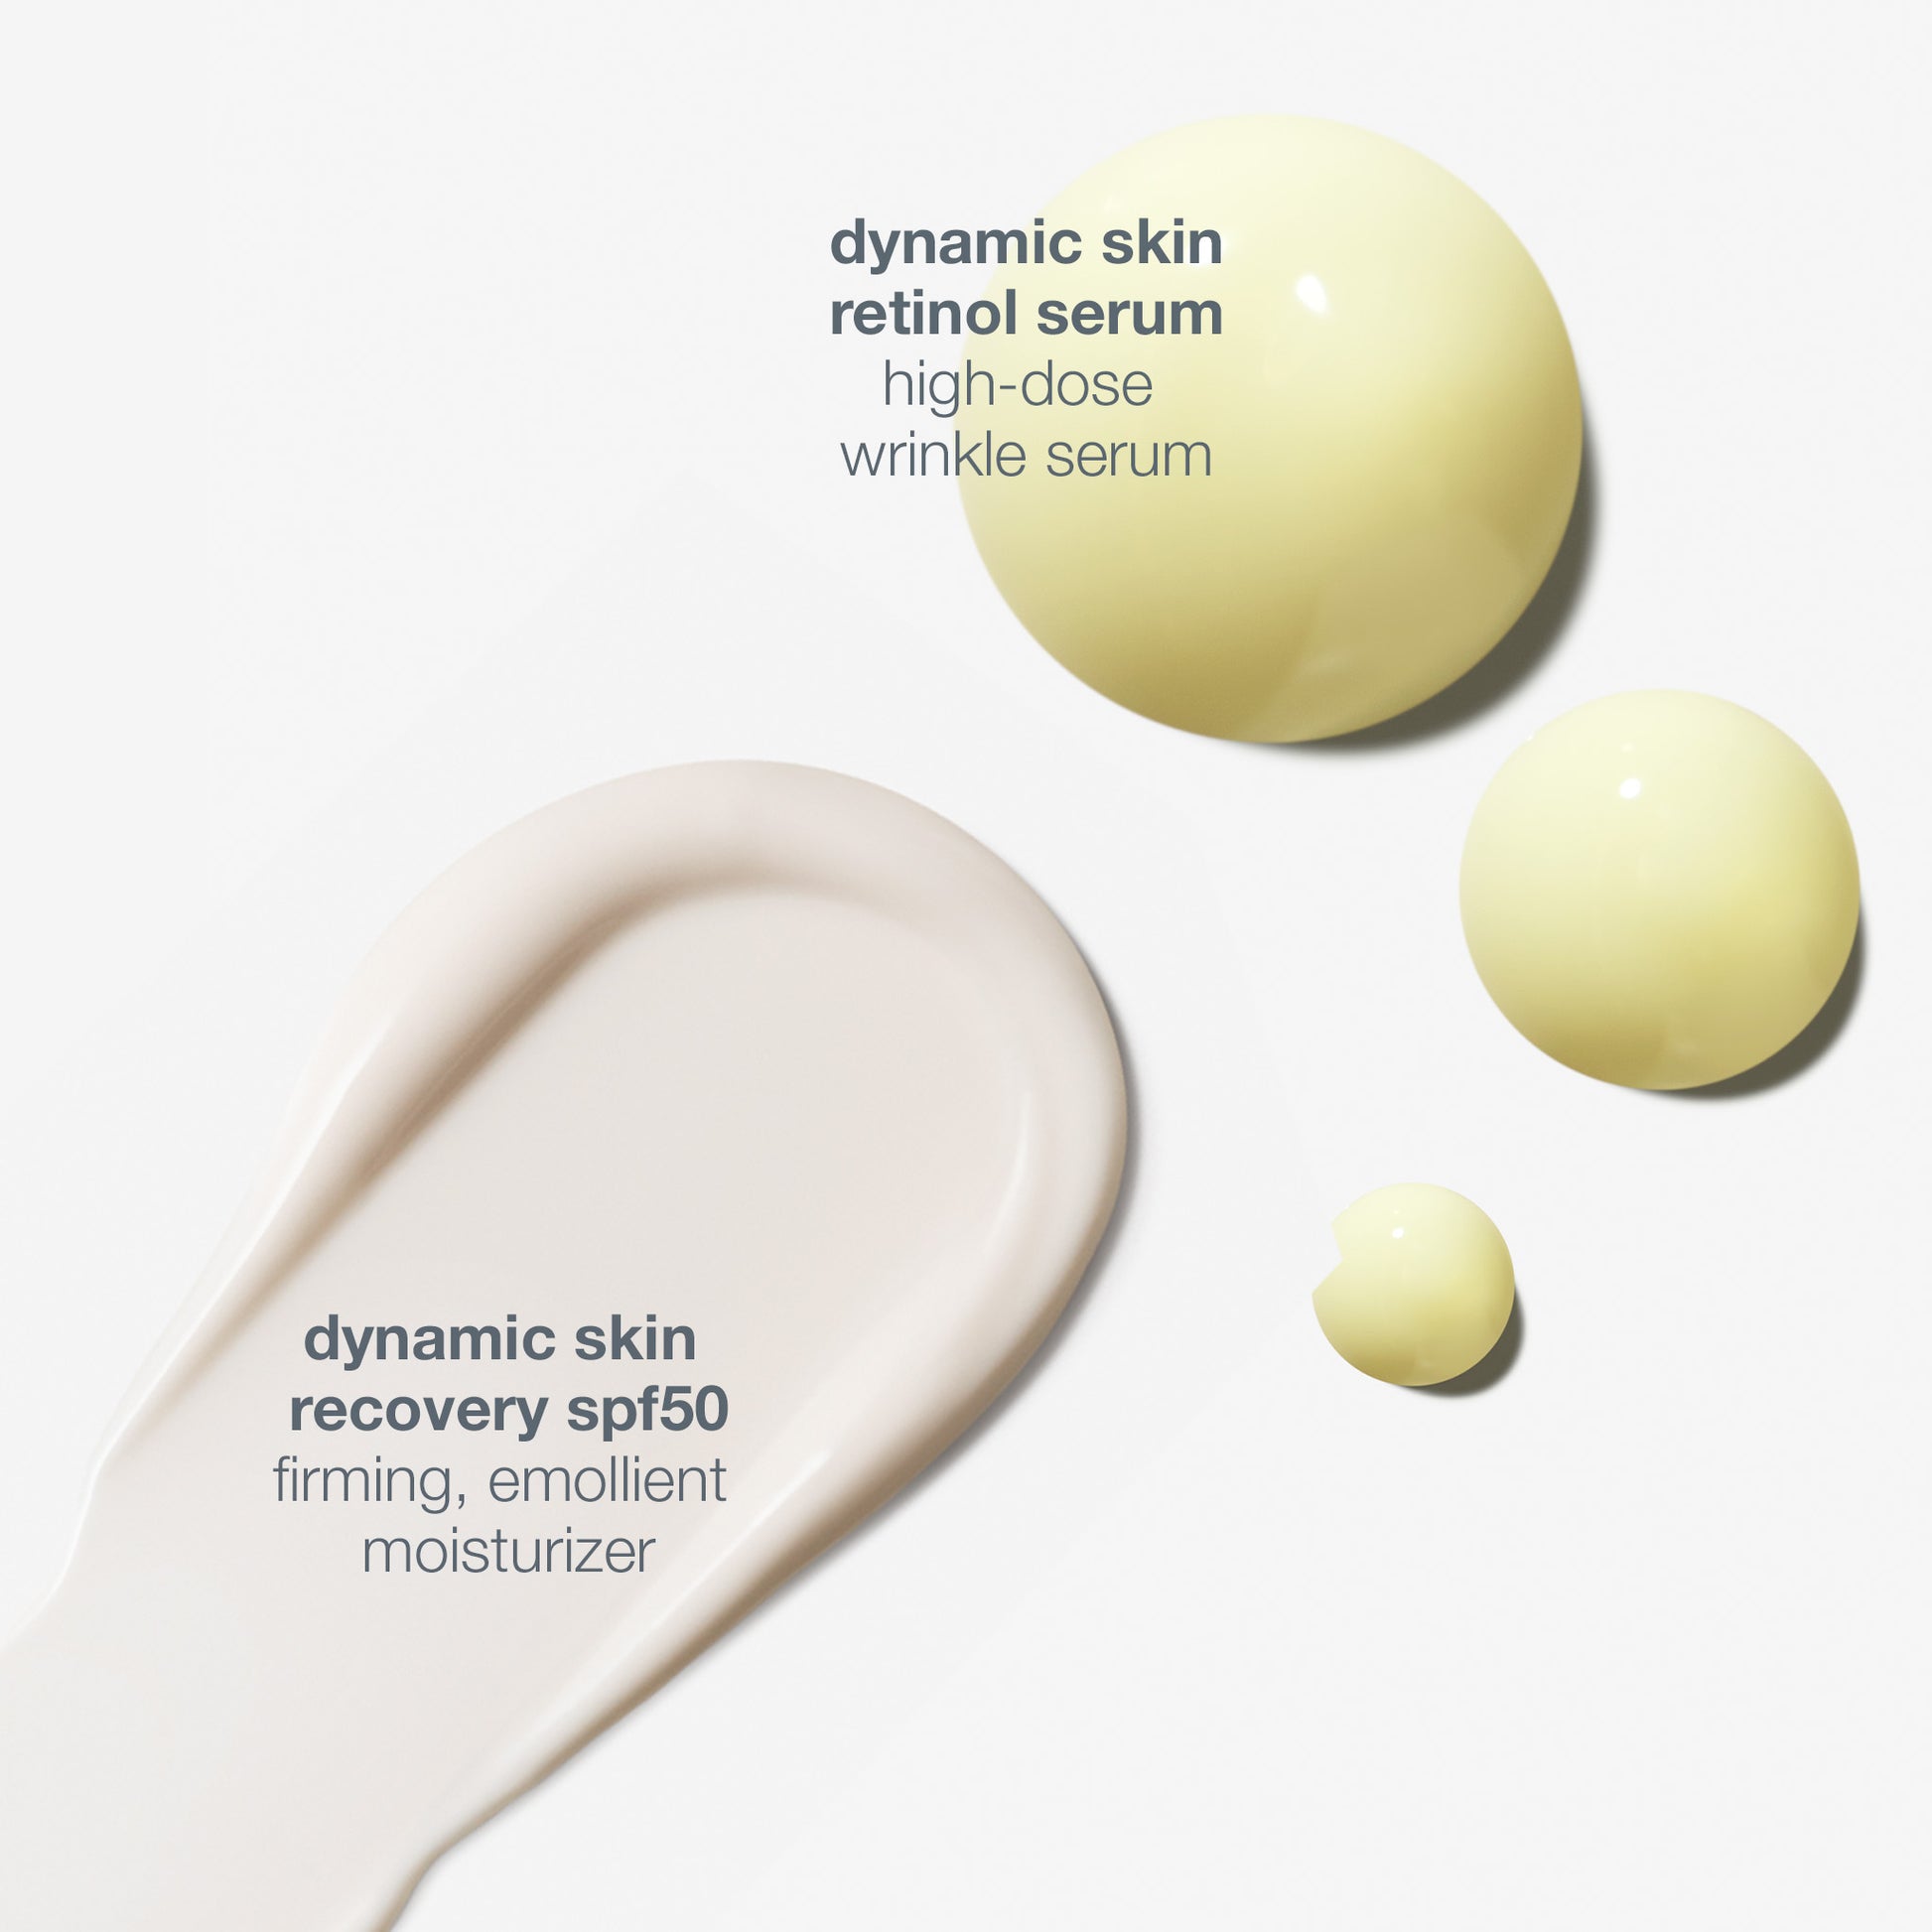 dynamic skin recovery spf50 and dynamic skin retinol serum swatch